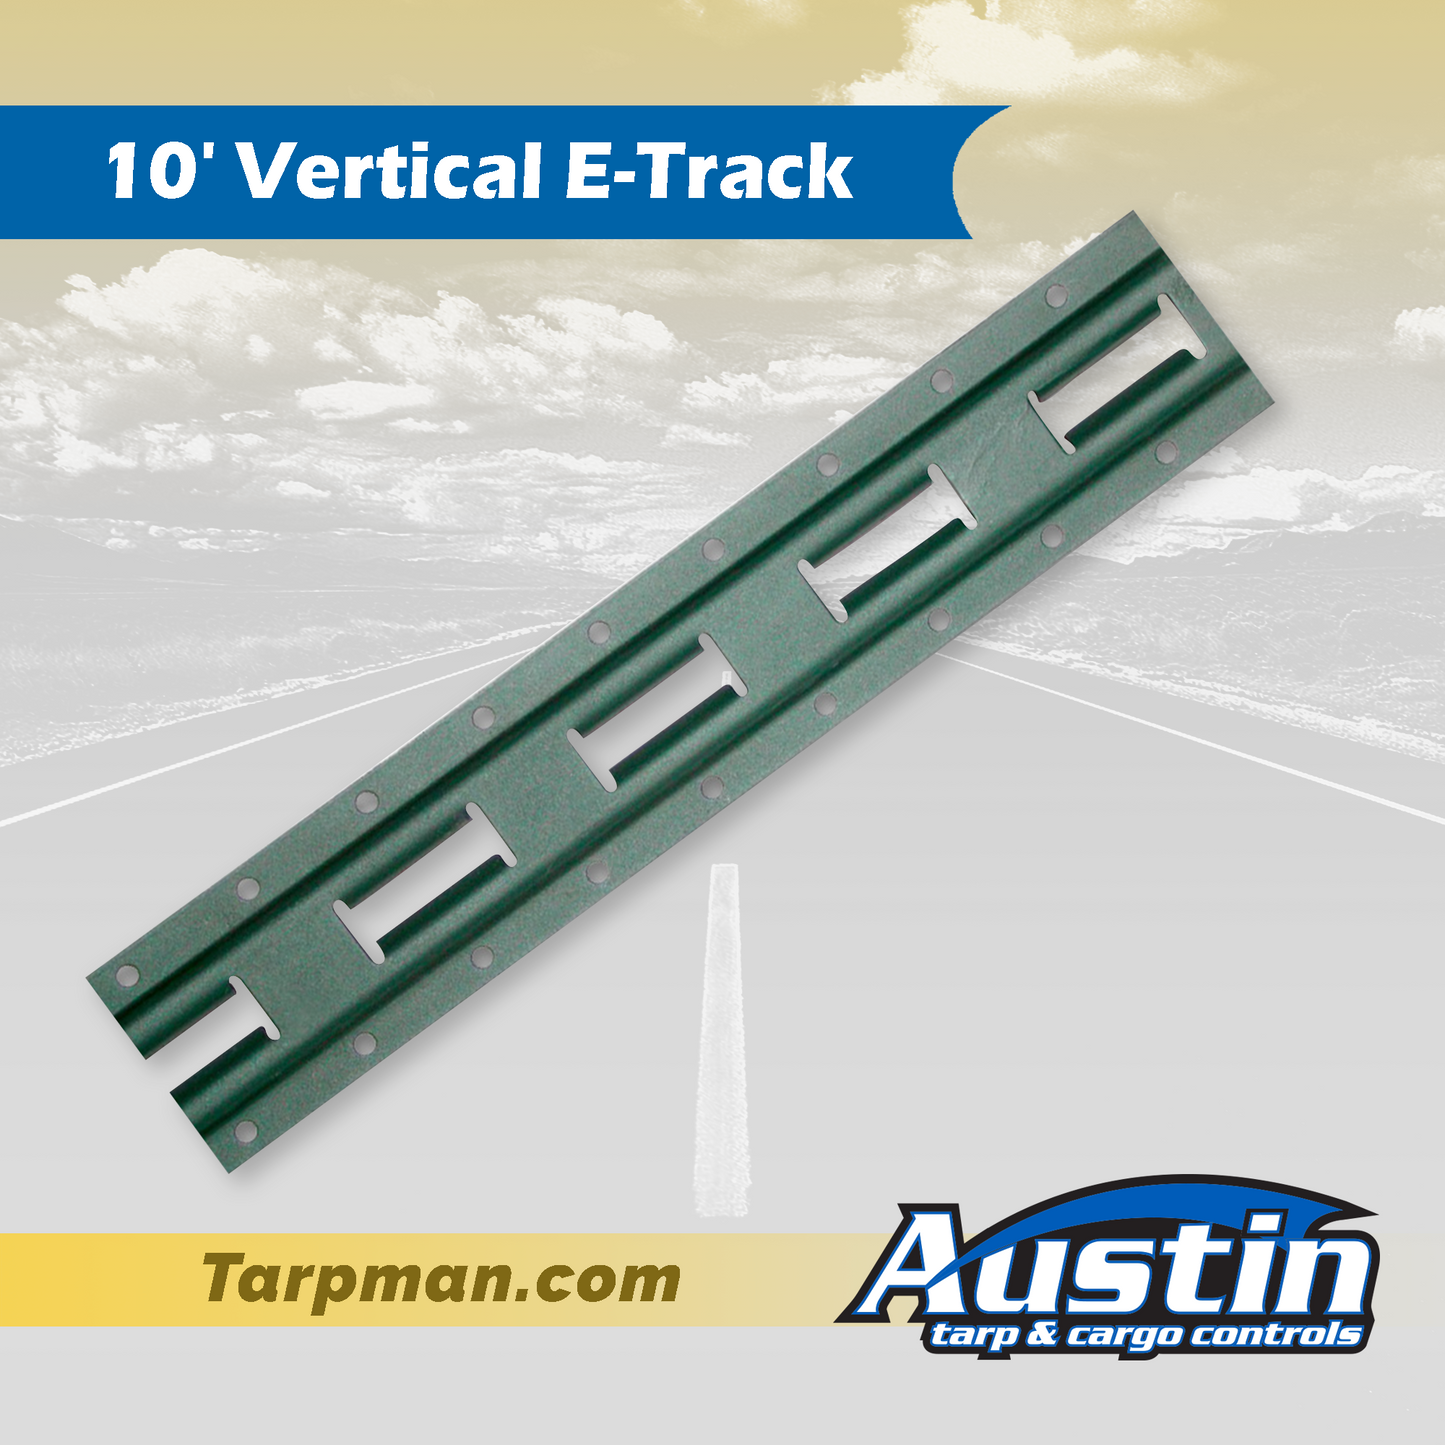 10' Vertical E-Track Tarpman.com | Austin Tarp & Cargo Controls